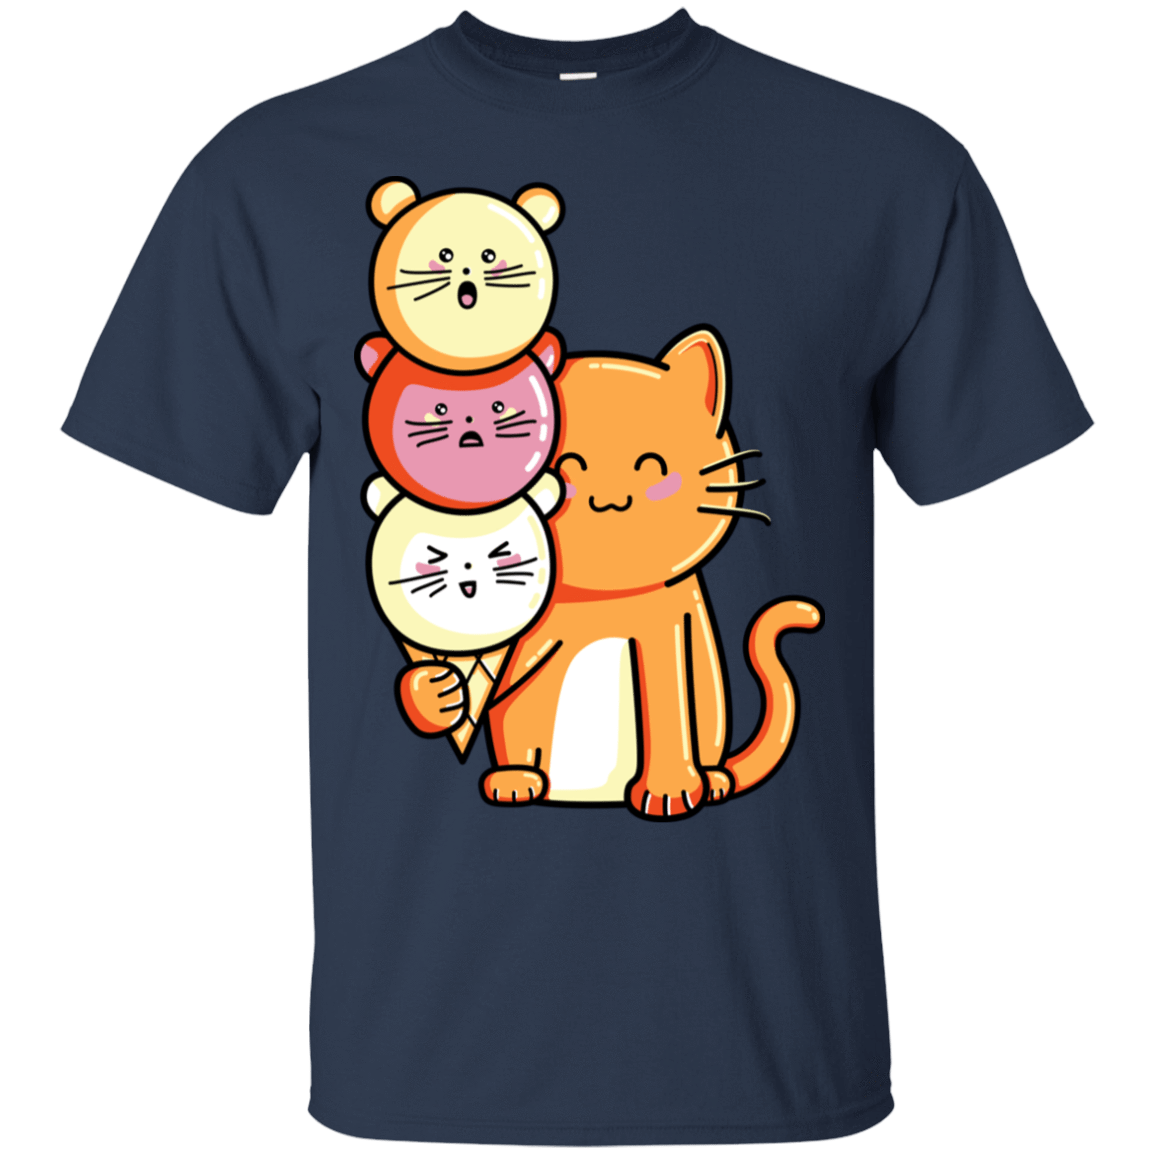 T-Shirts Navy / S Cat and Micecream T-Shirt